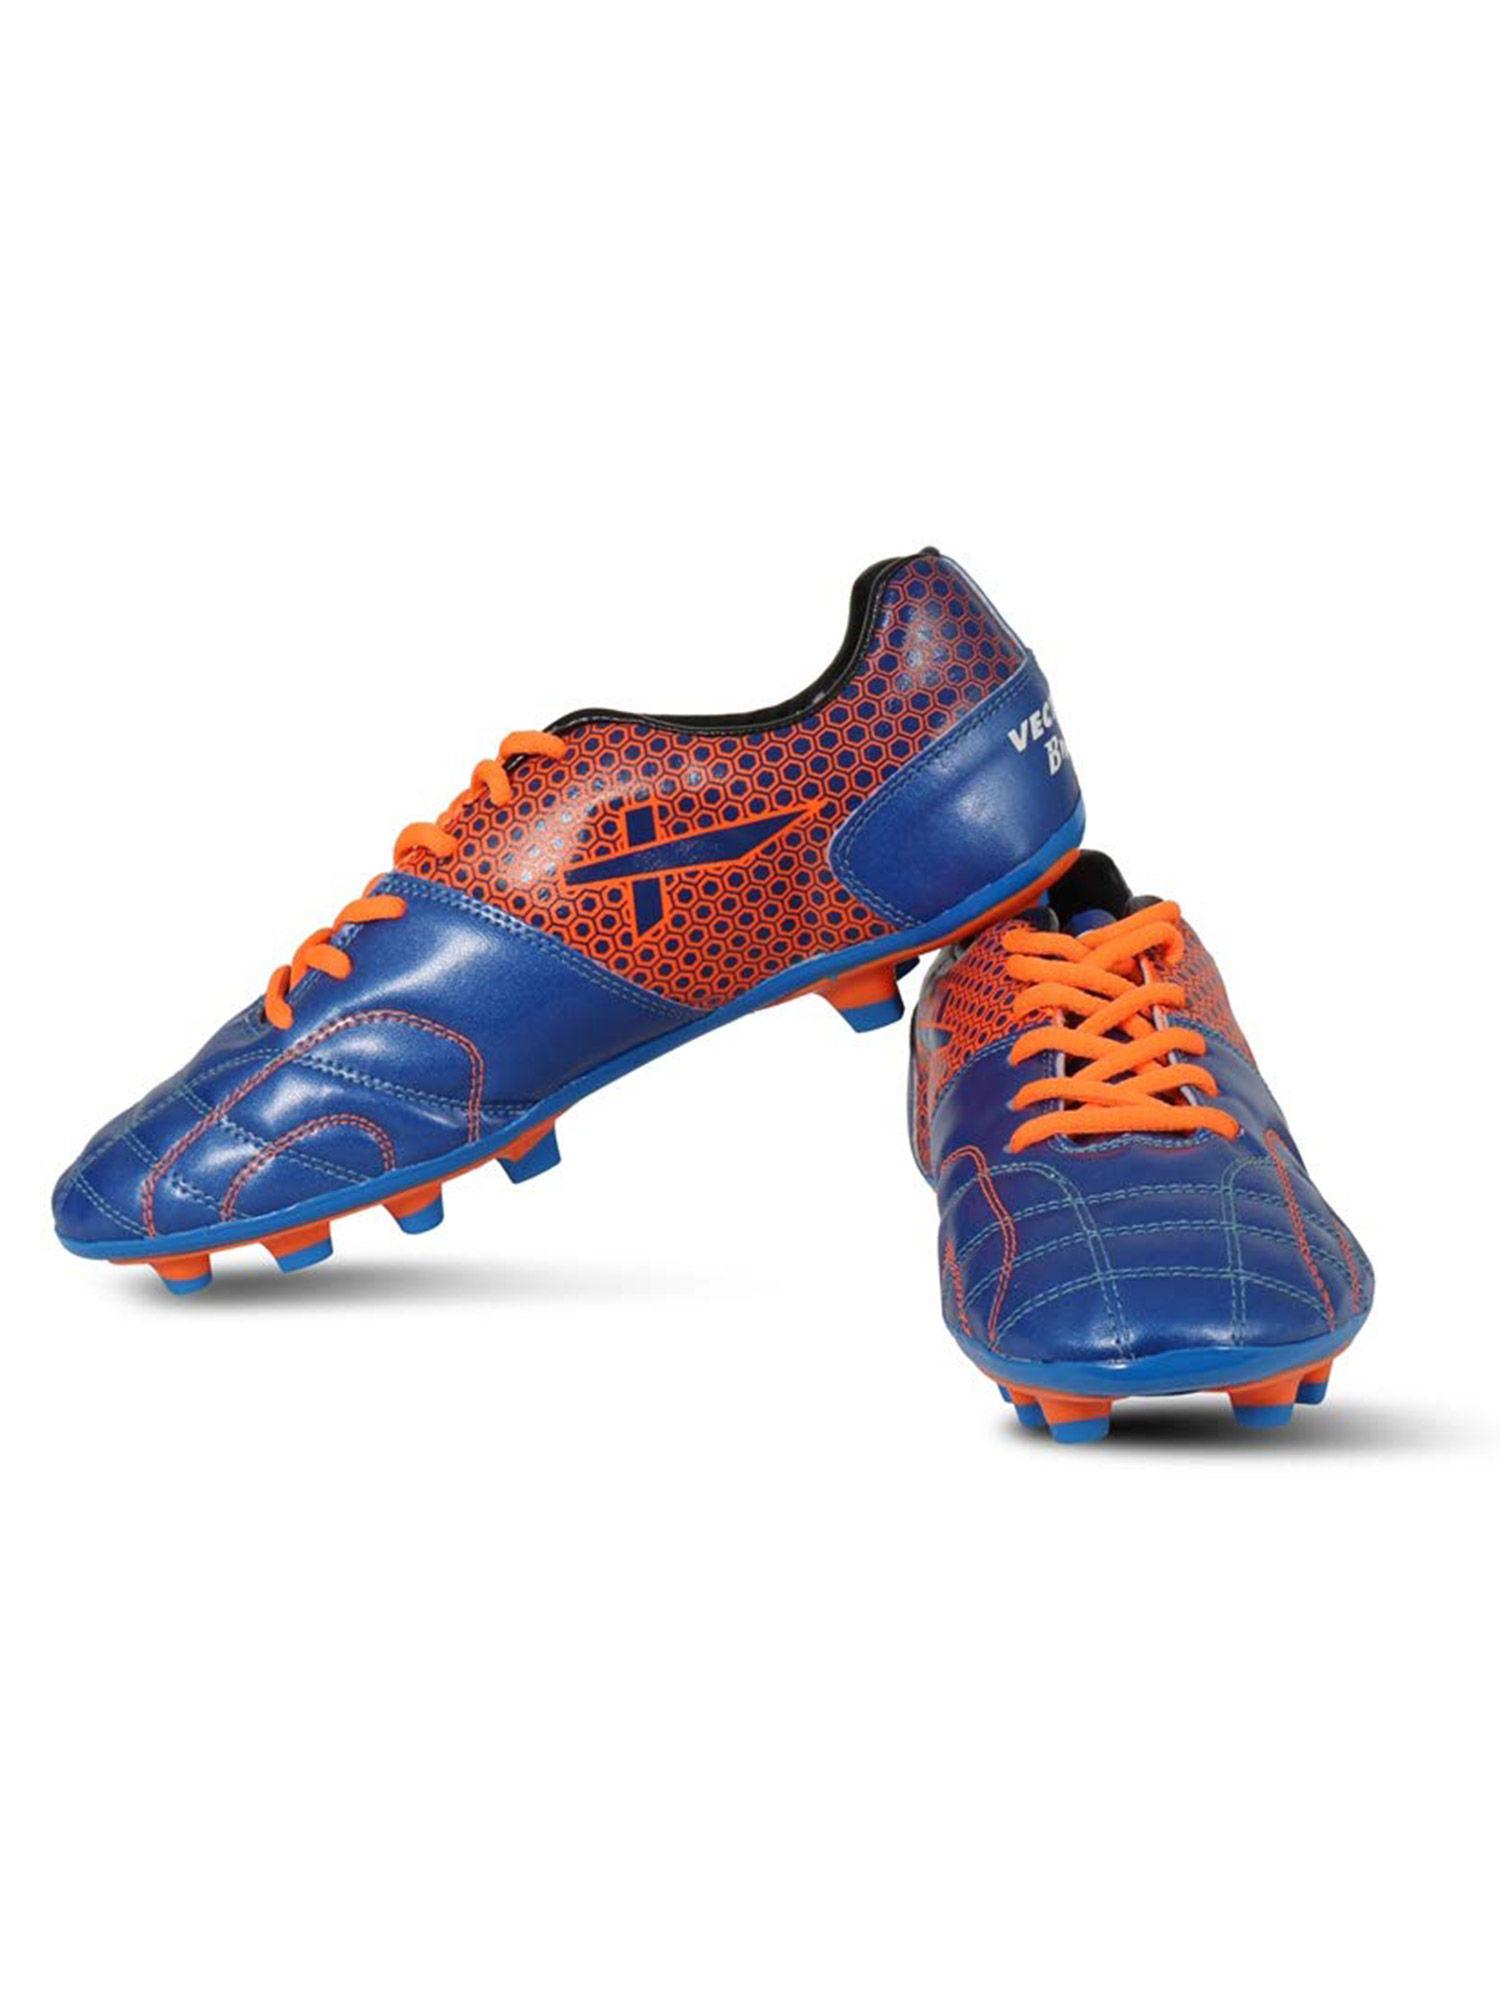 breeze football shoes for men - blue - orange